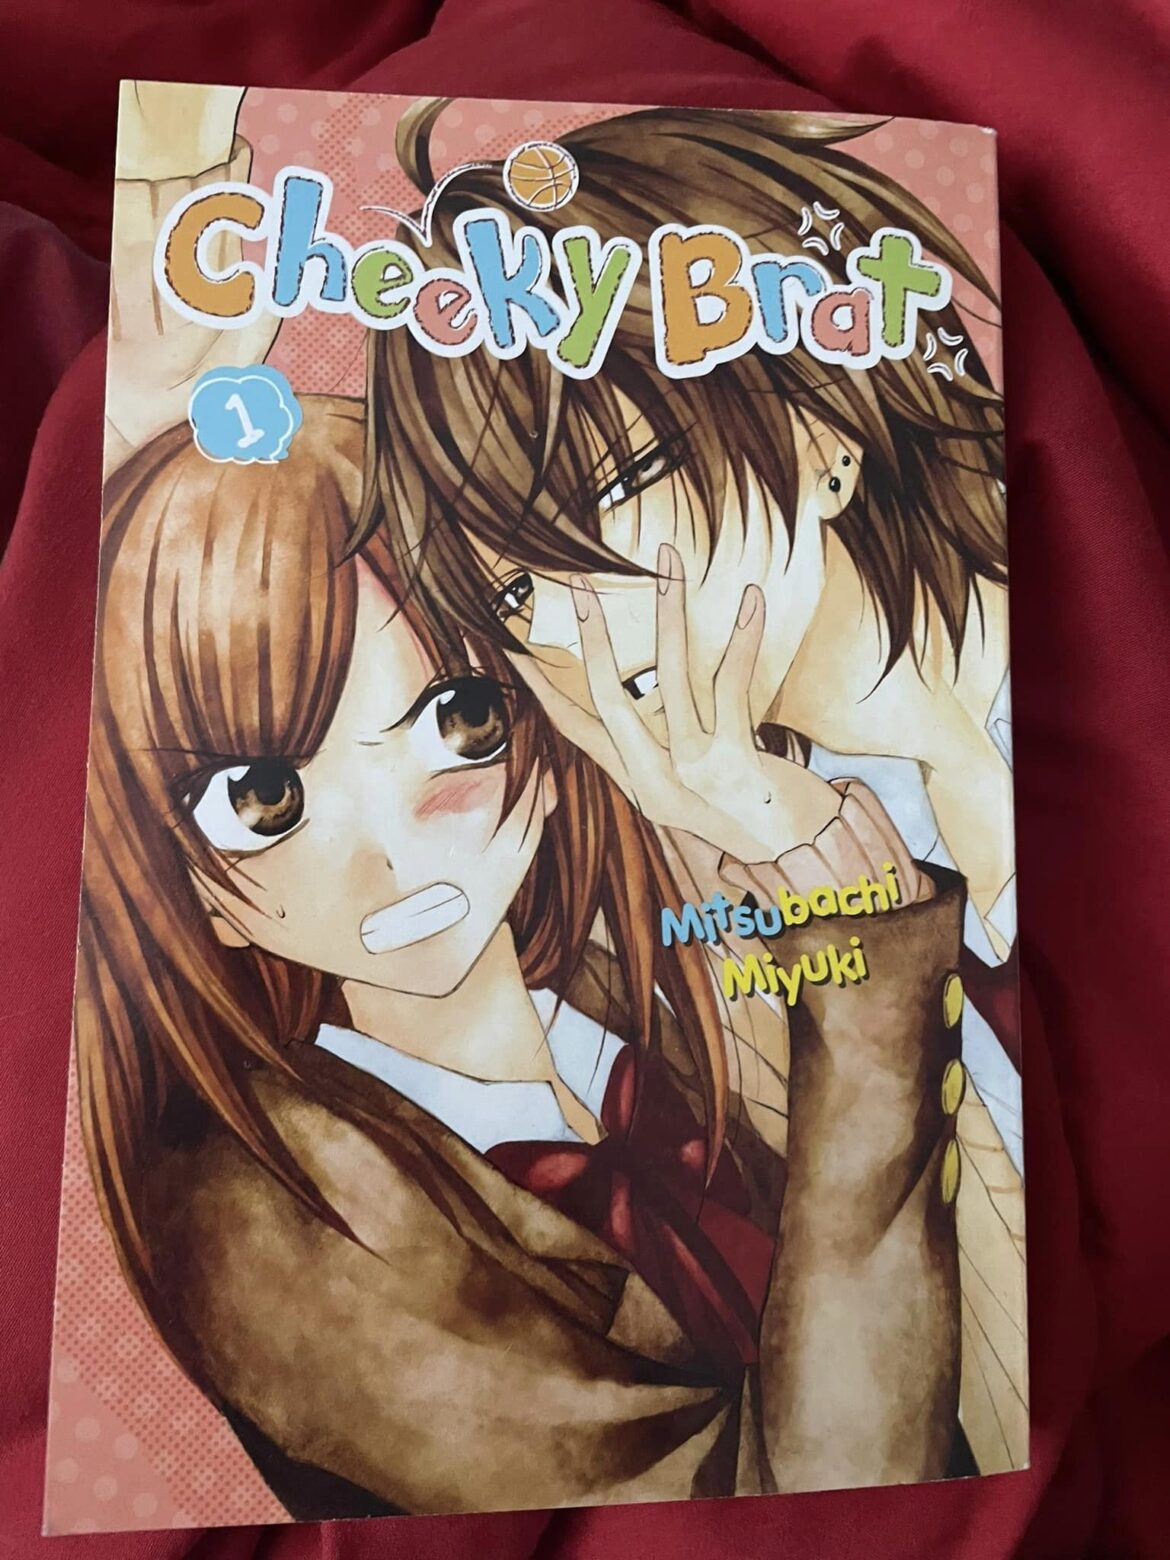 Morgan’s Monthly Manga Musings #4: “Cheeky Brat:”